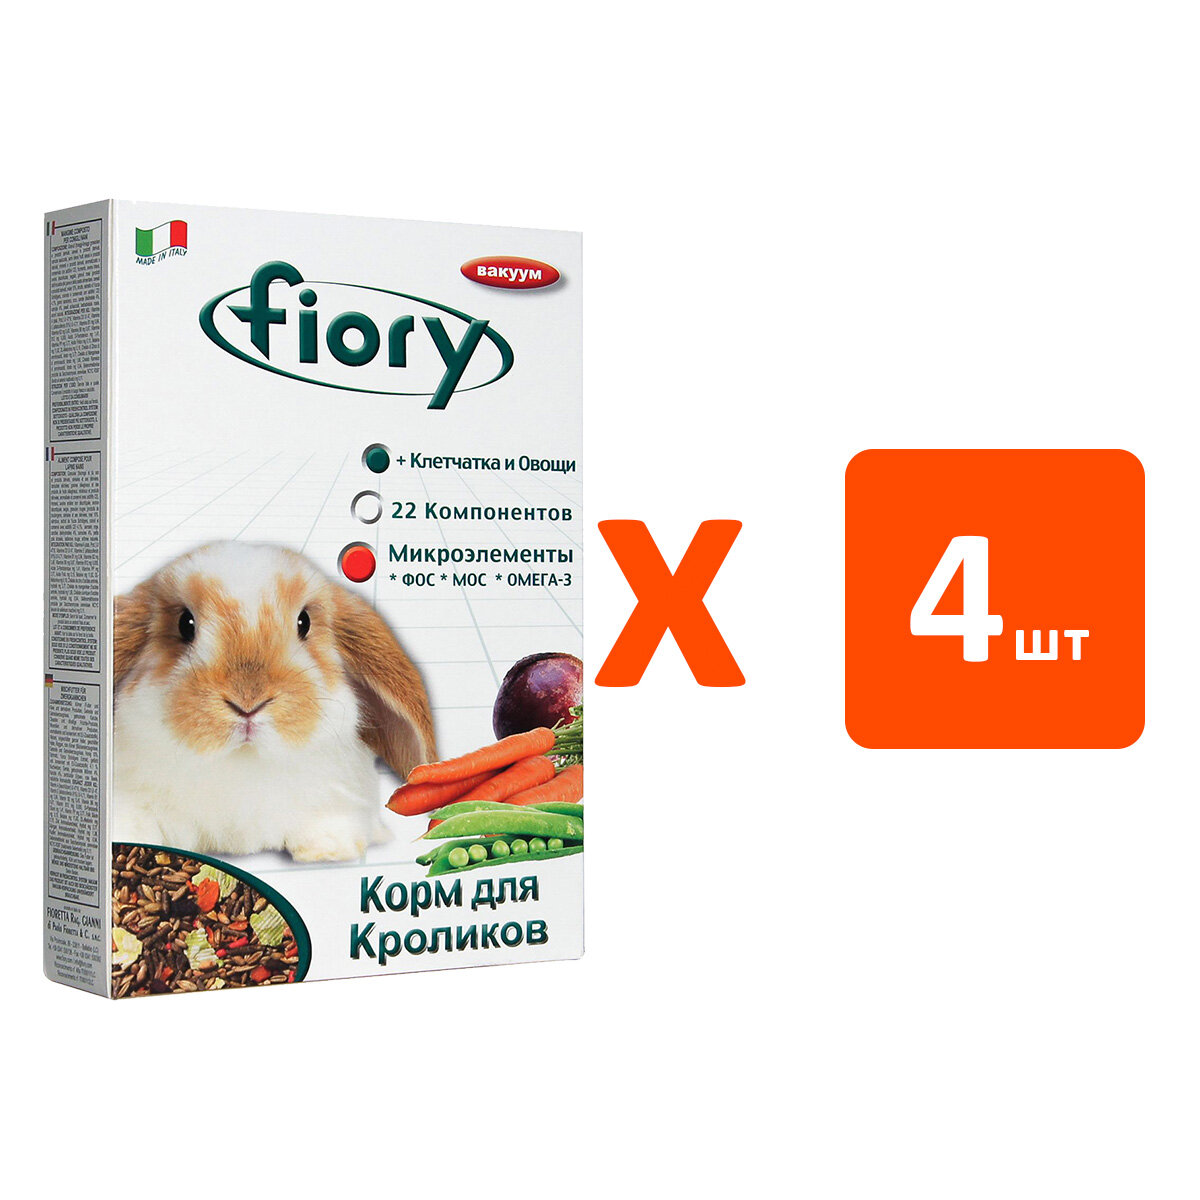 FIORY KARAOTE — Фиори корм для кроликов (850 гр х 4 шт)